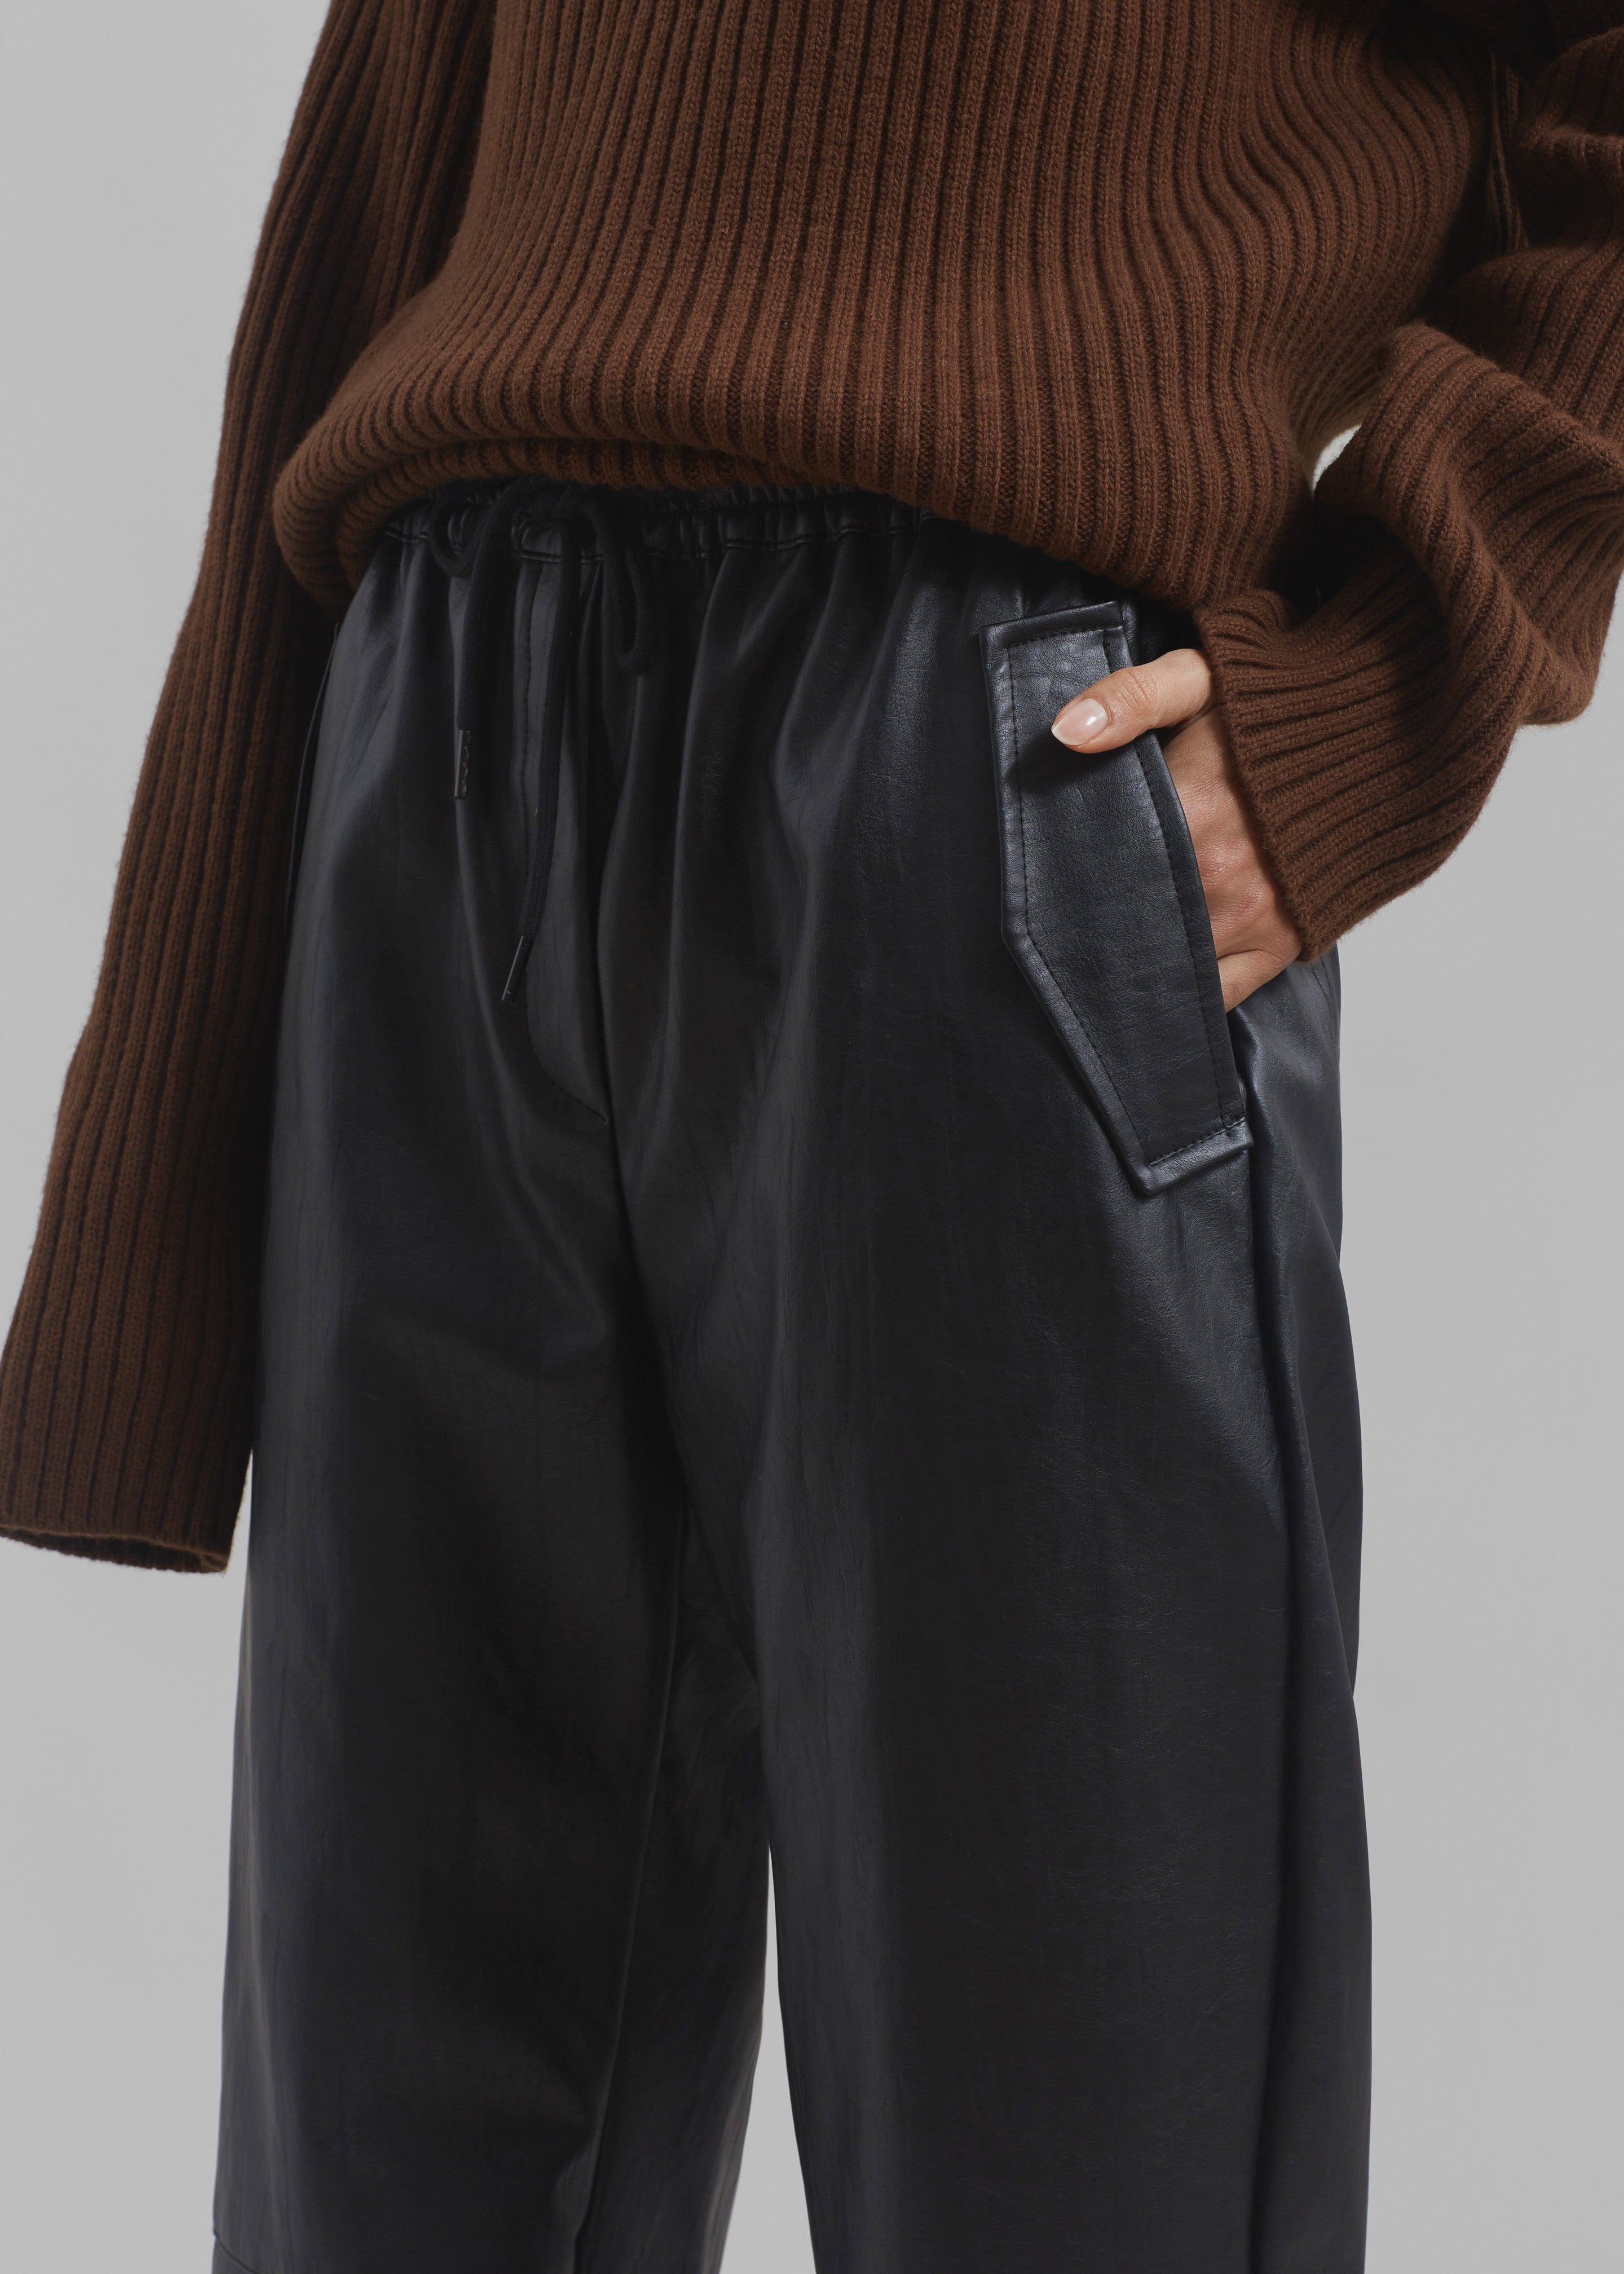 Grayson Faux Leather Pants - Black - 3